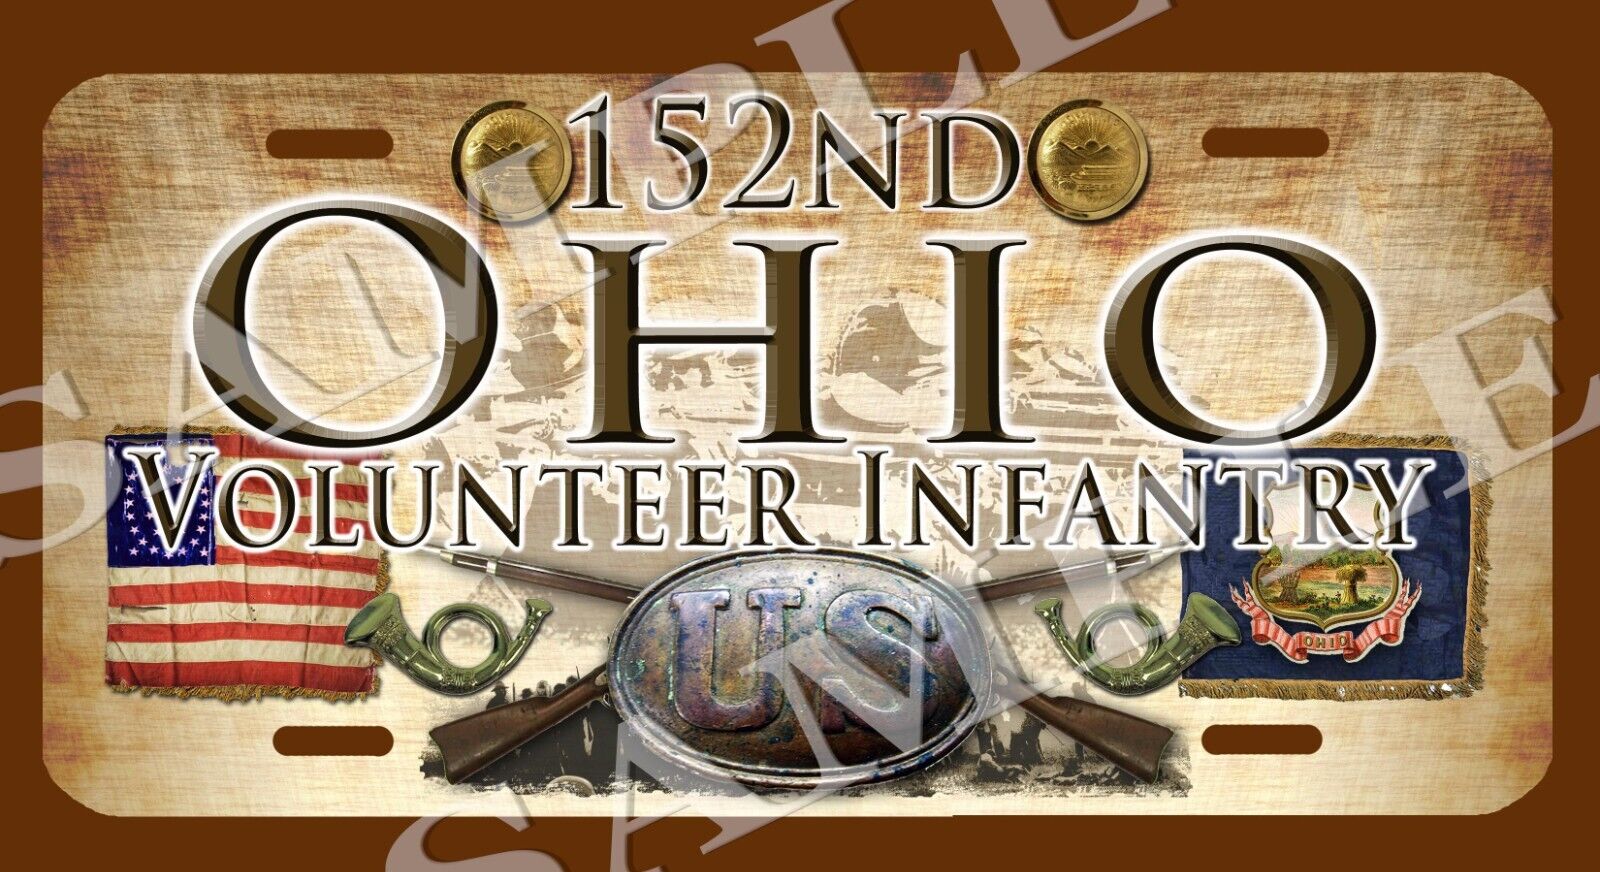 152nd Ohio Volunteer Infantry American Civil War Themed vehicle license plate